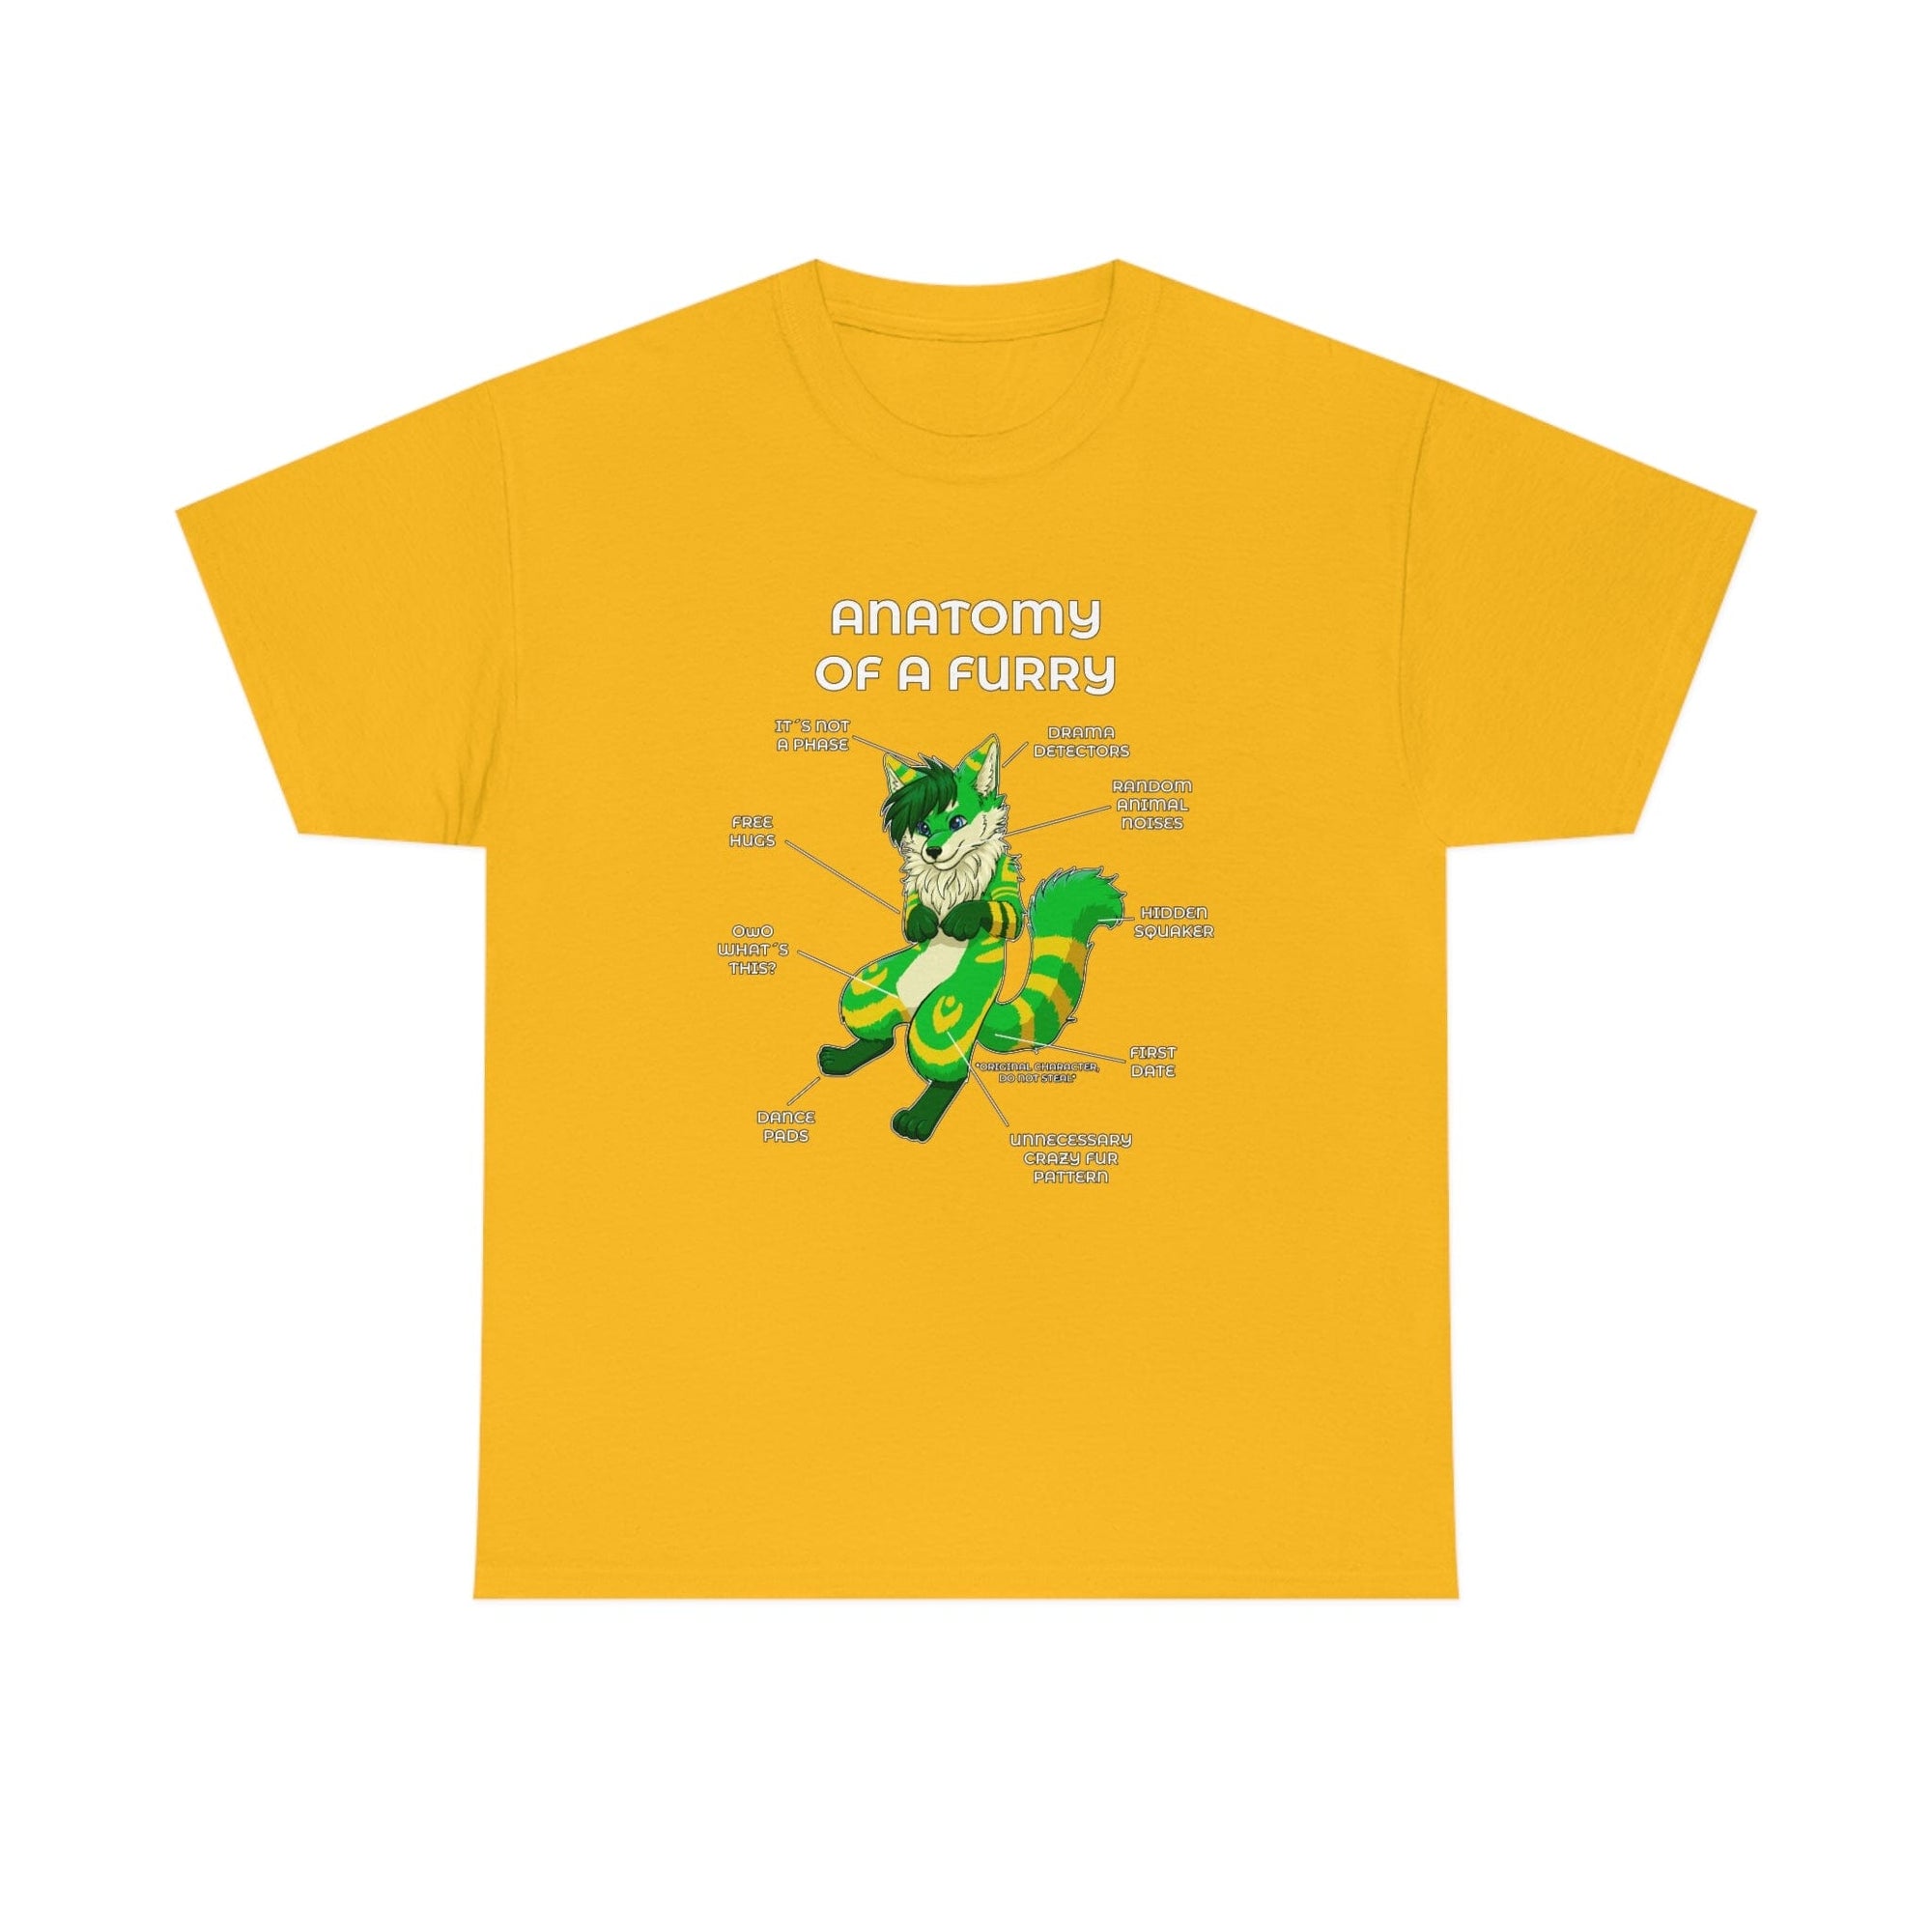 Furry Green and Yellow - T-Shirt T-Shirt Artworktee Gold S 